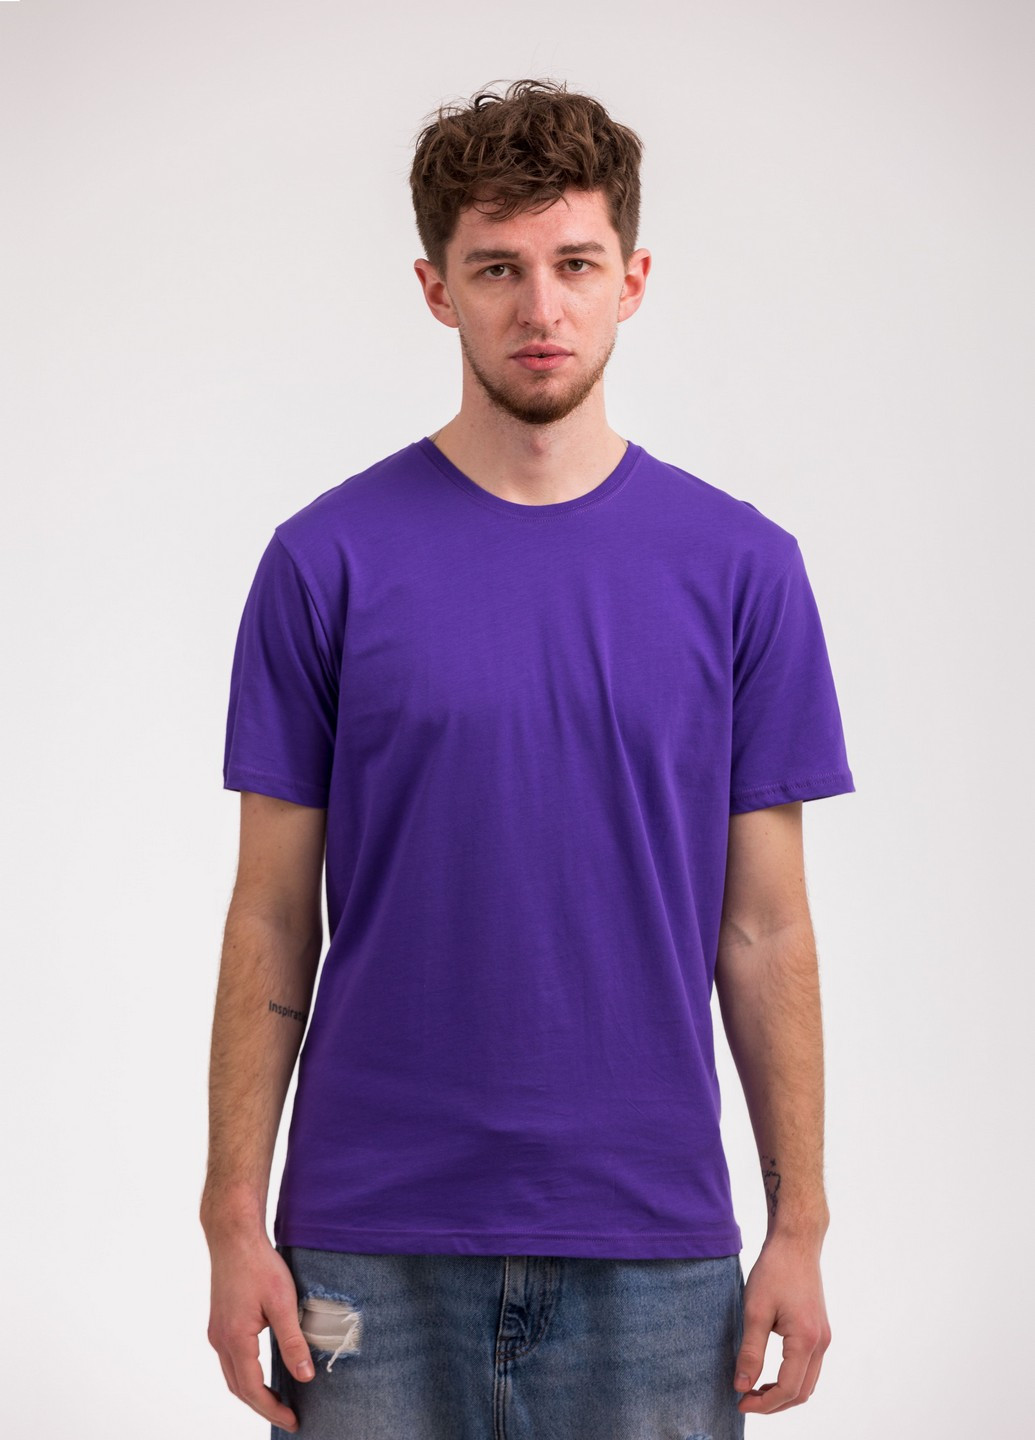 Фіолетова футболка чоловіча Наталюкс 12-1343